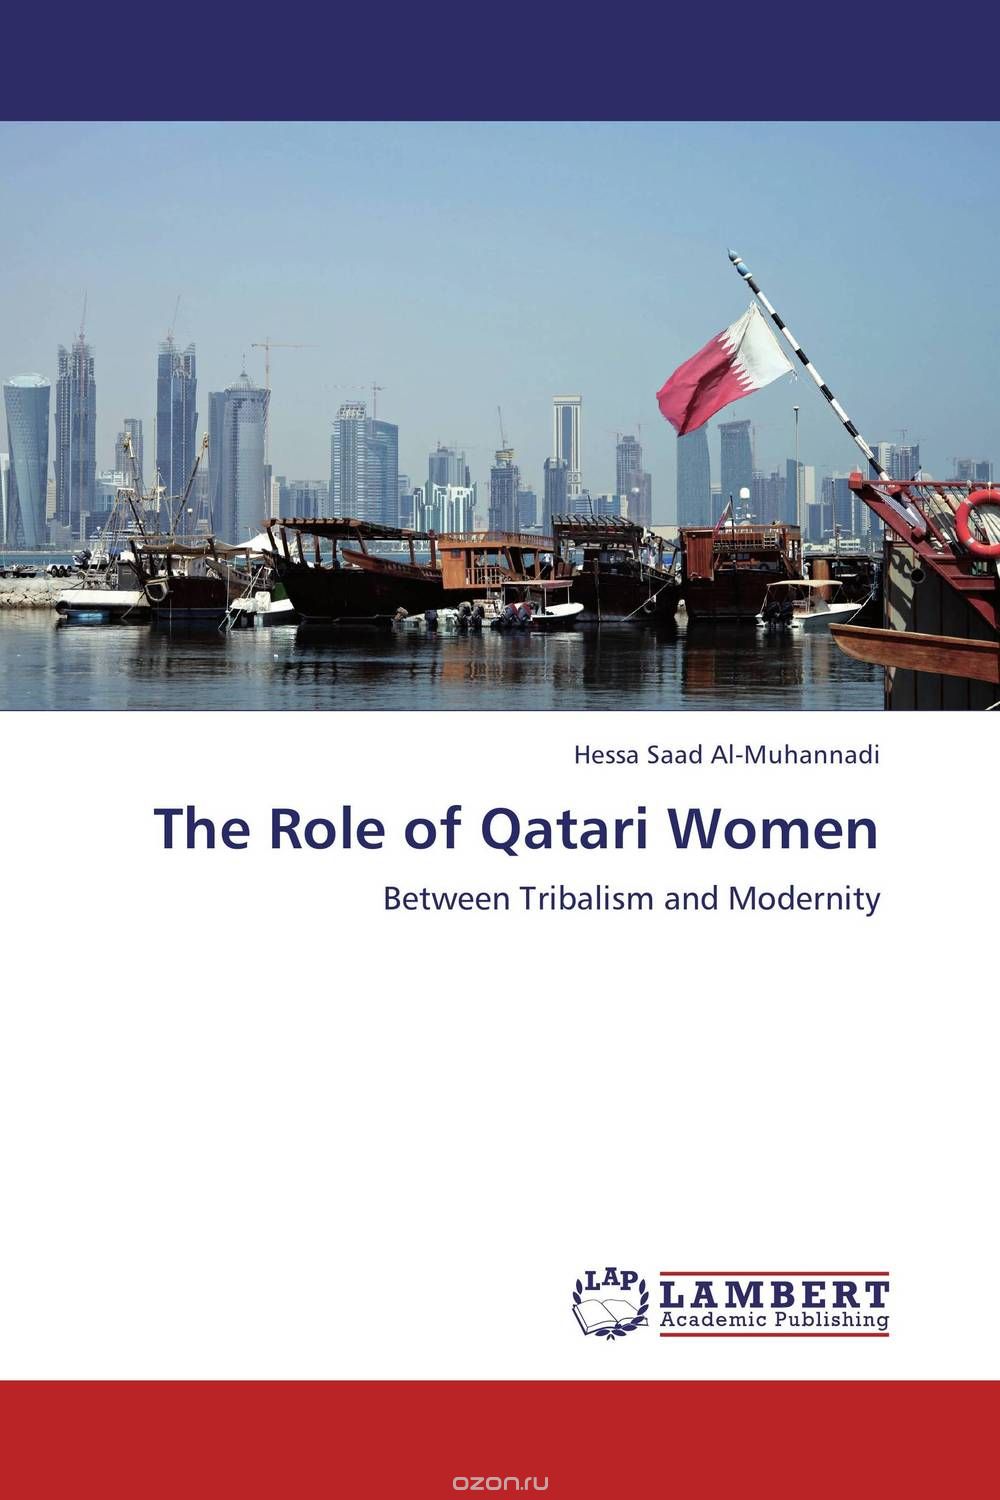 Скачать книгу "The Role of Qatari Women"